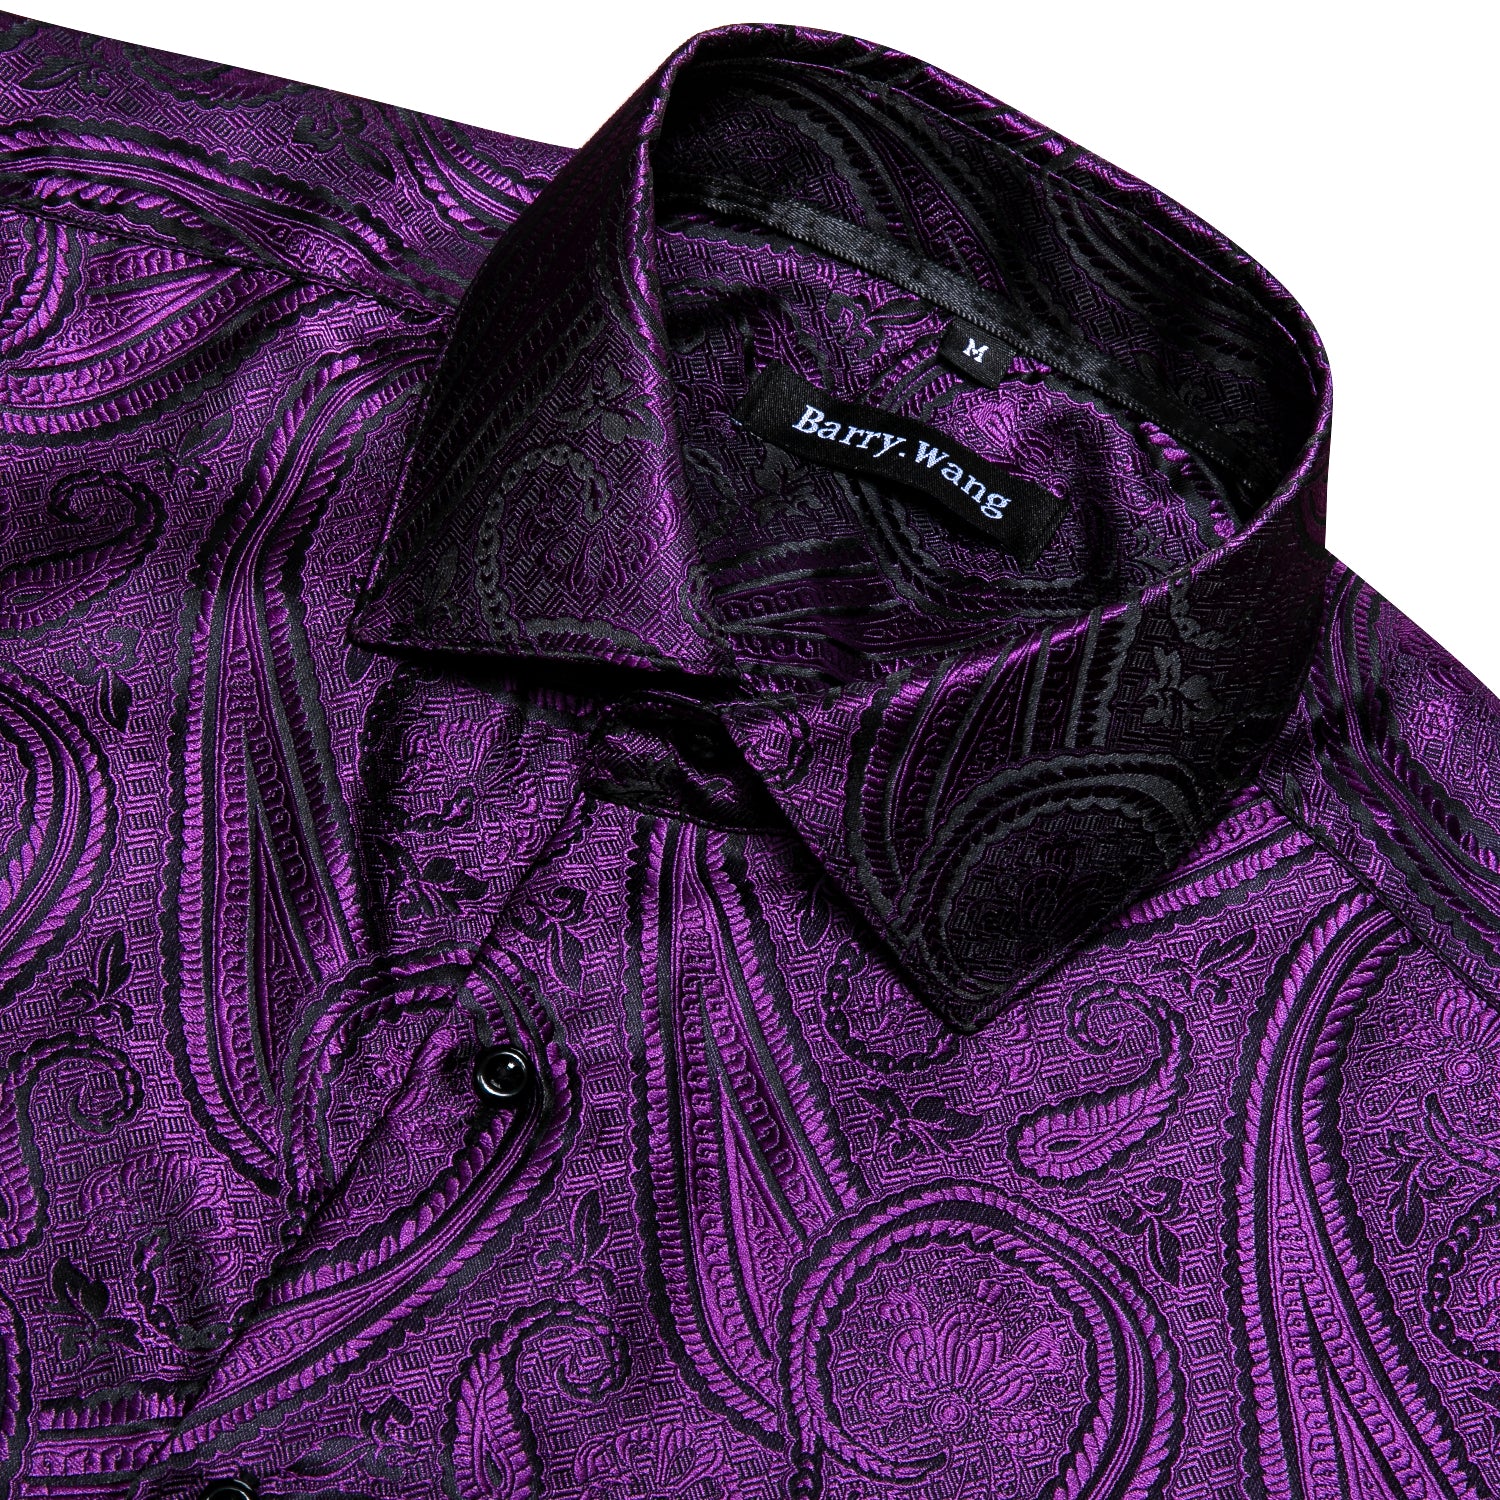 Barry.wang Button Down Shirt Men's Purple Silk Paisley Long Sleeve Daily Slim-fit Shirt